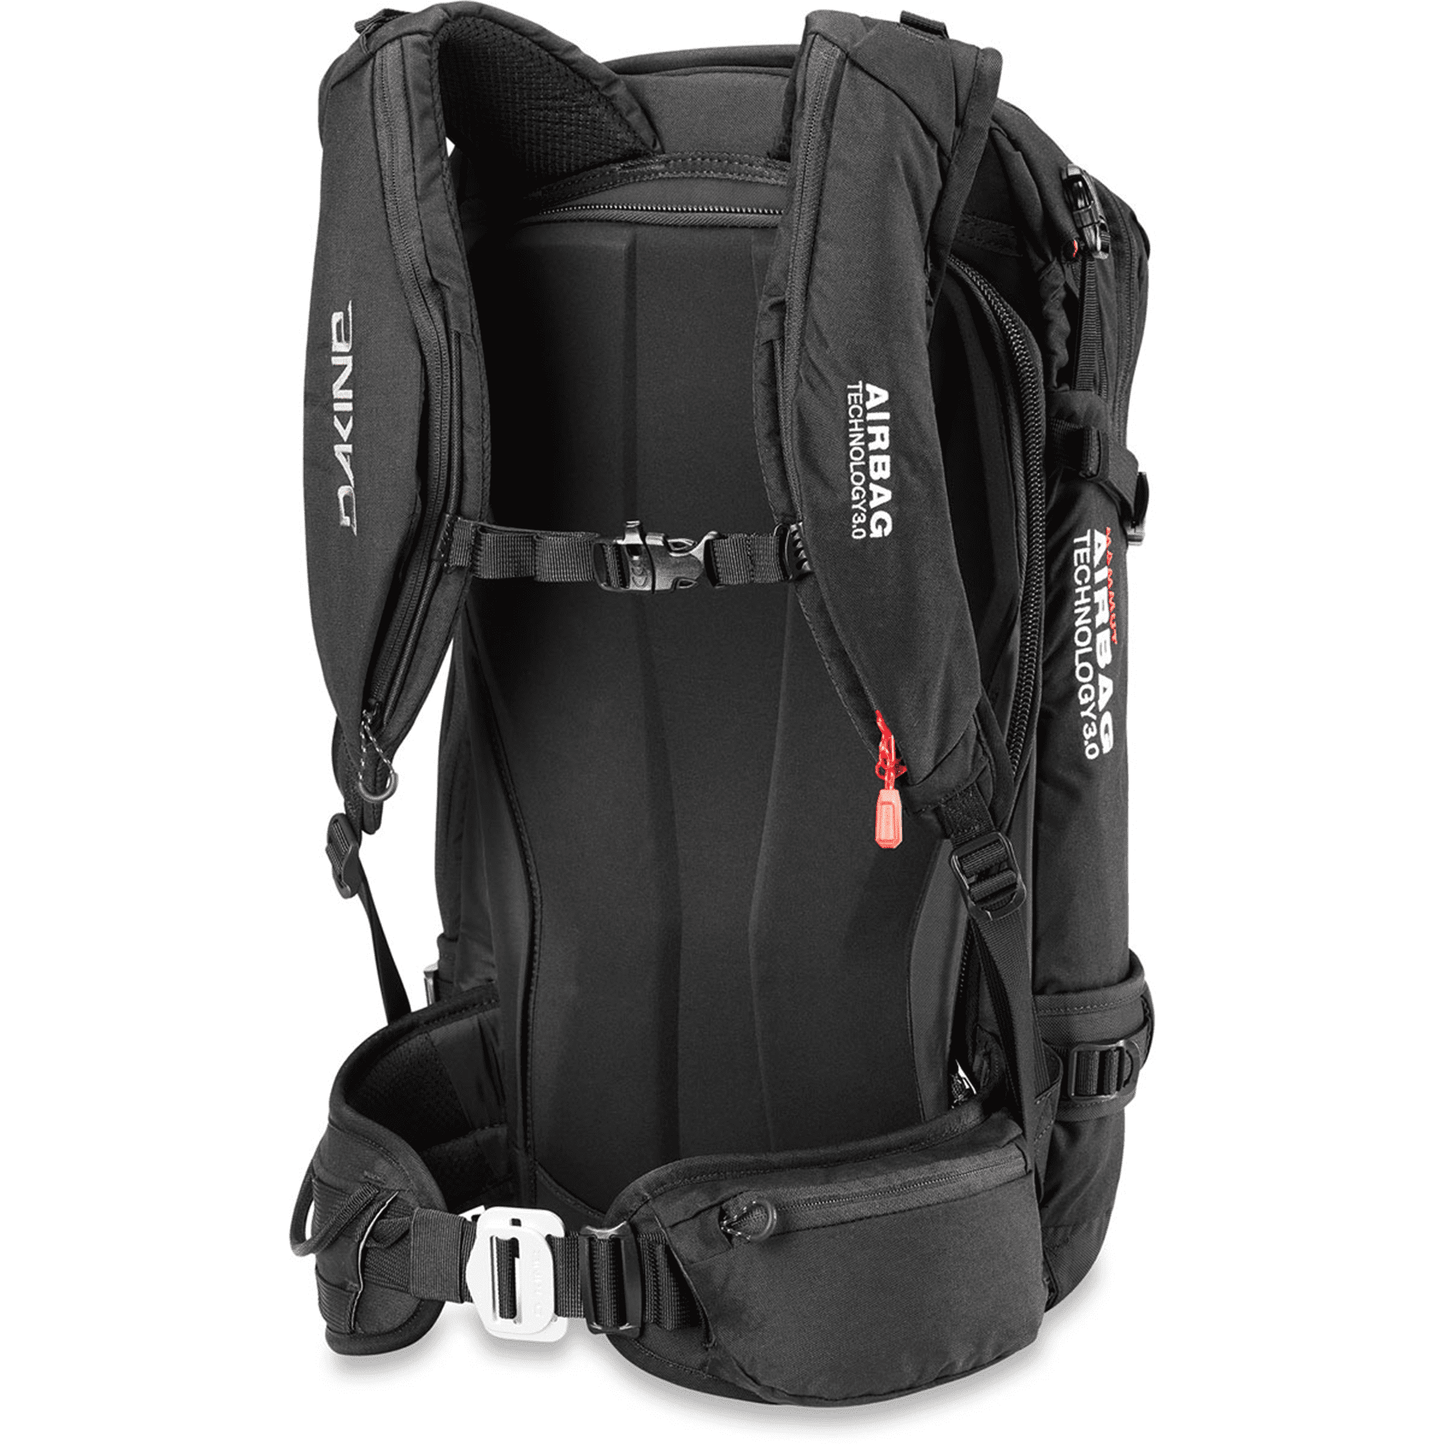 Dakine Poacher RAS 36L Backpack